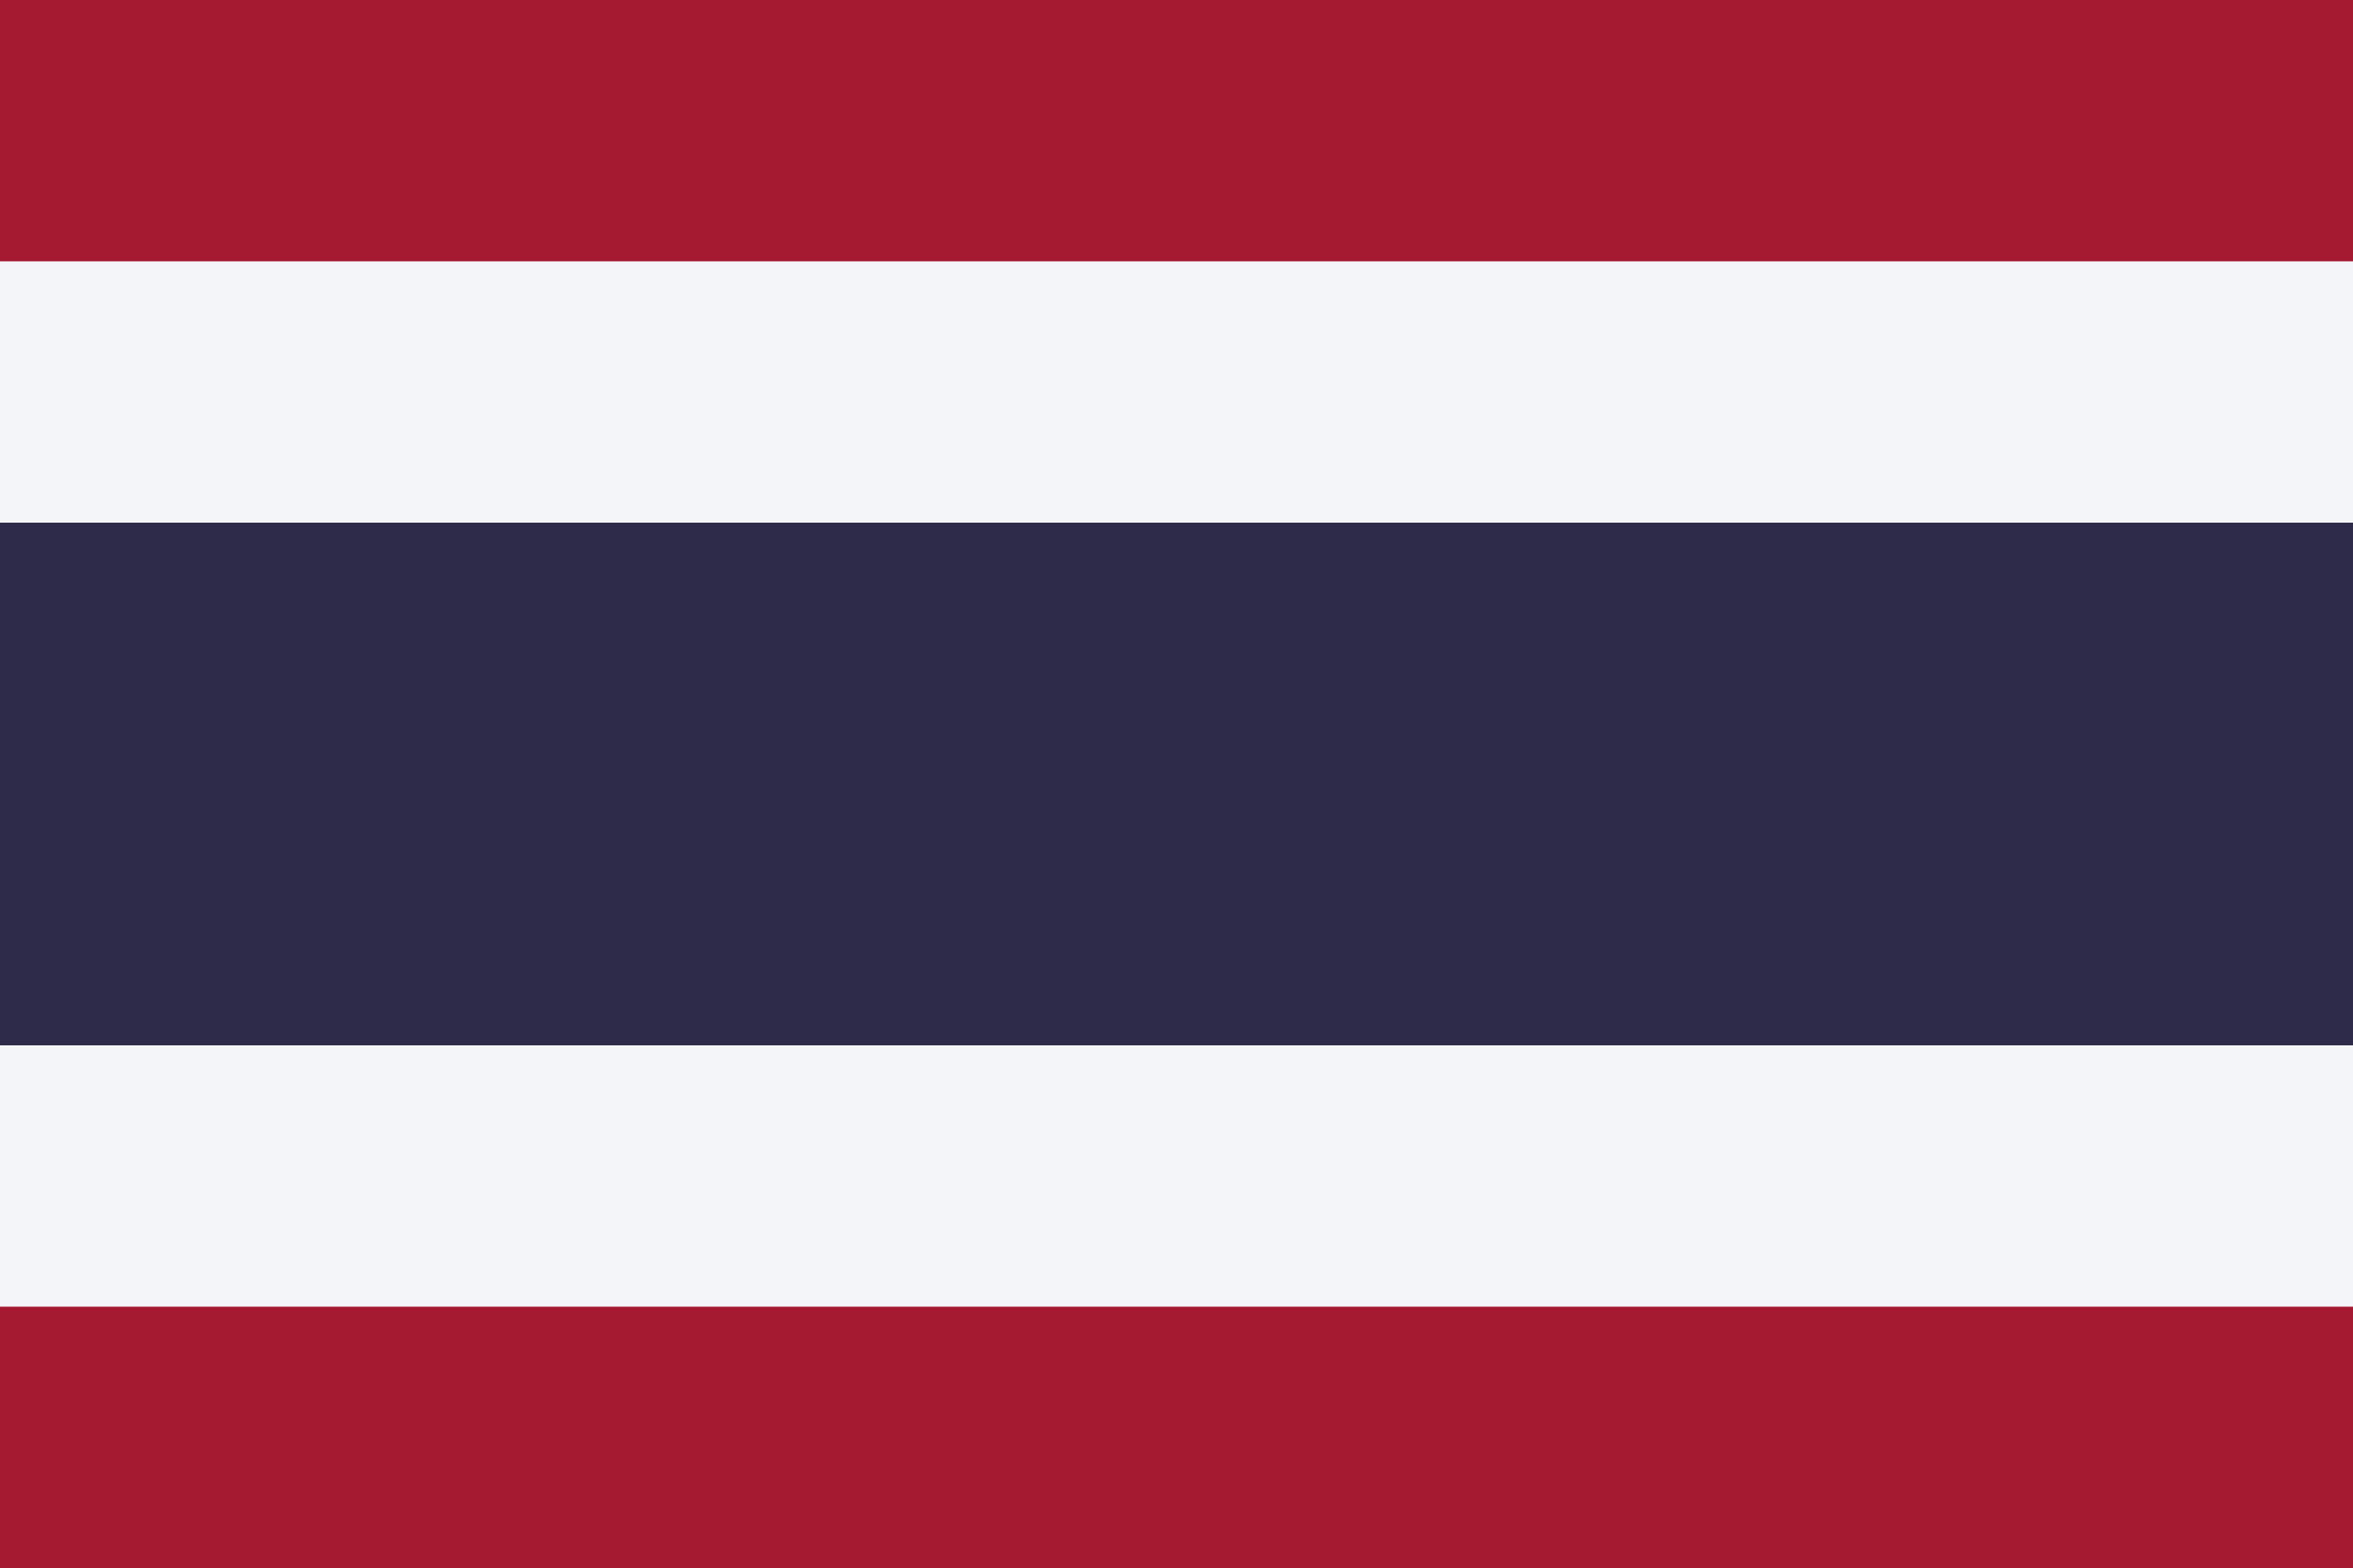 Free Thailand Flag Documents: PDF, DOC, DOCX, HTML & More!